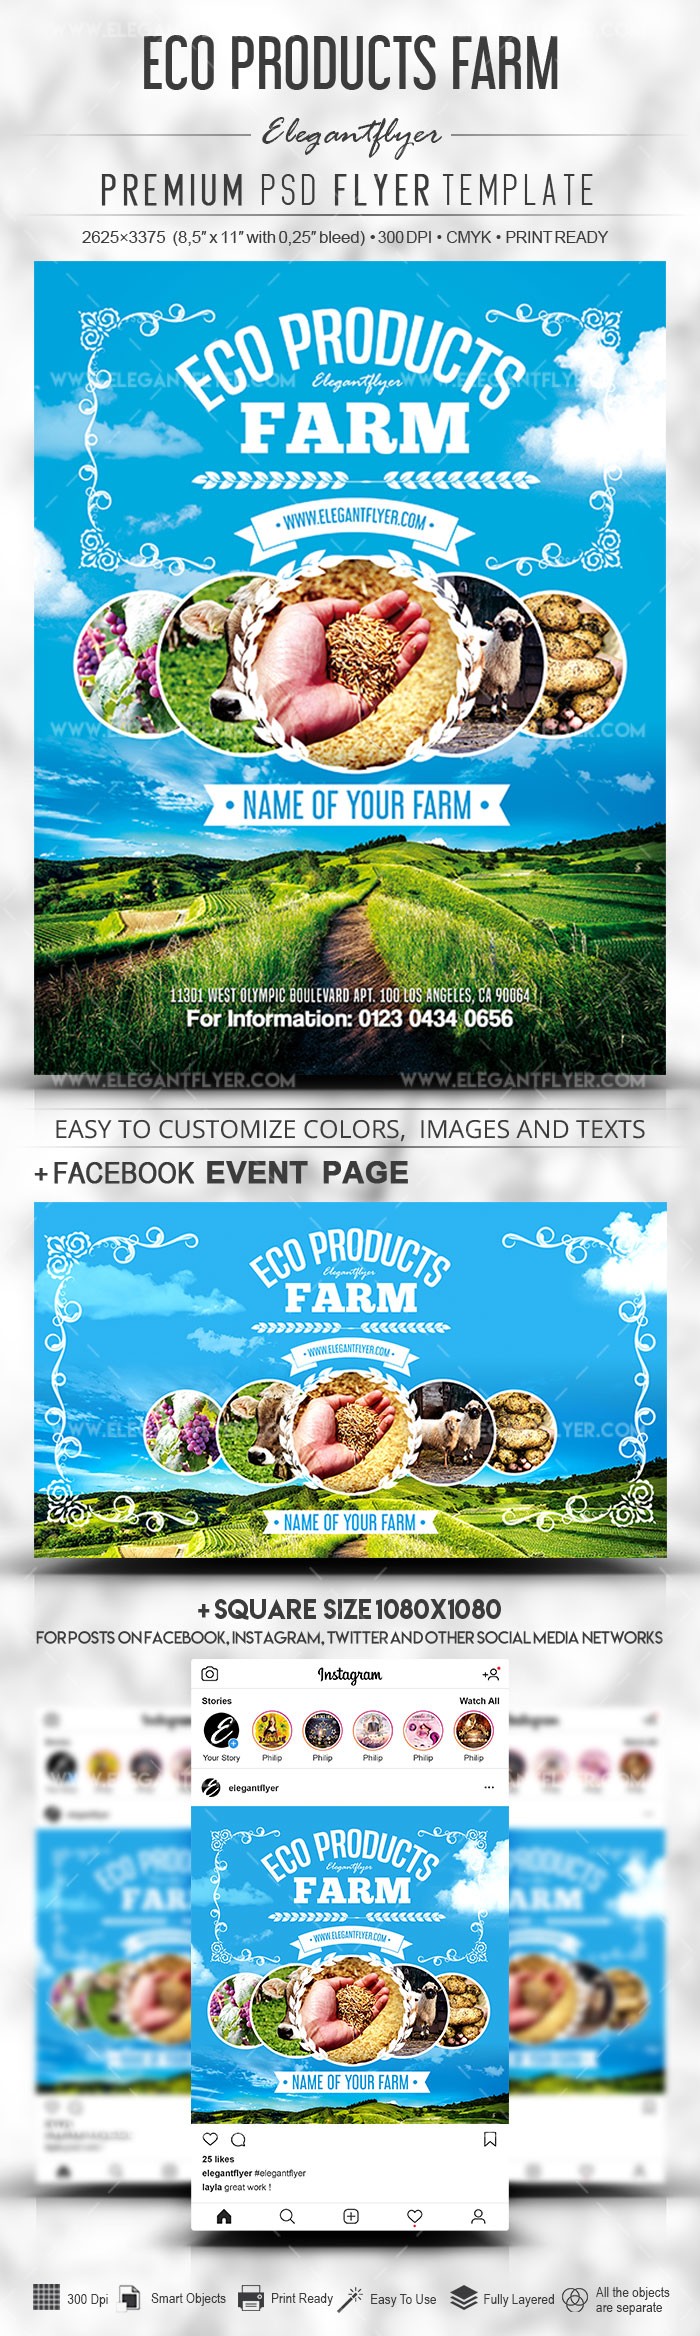 Eco Products Farm by ElegantFlyer